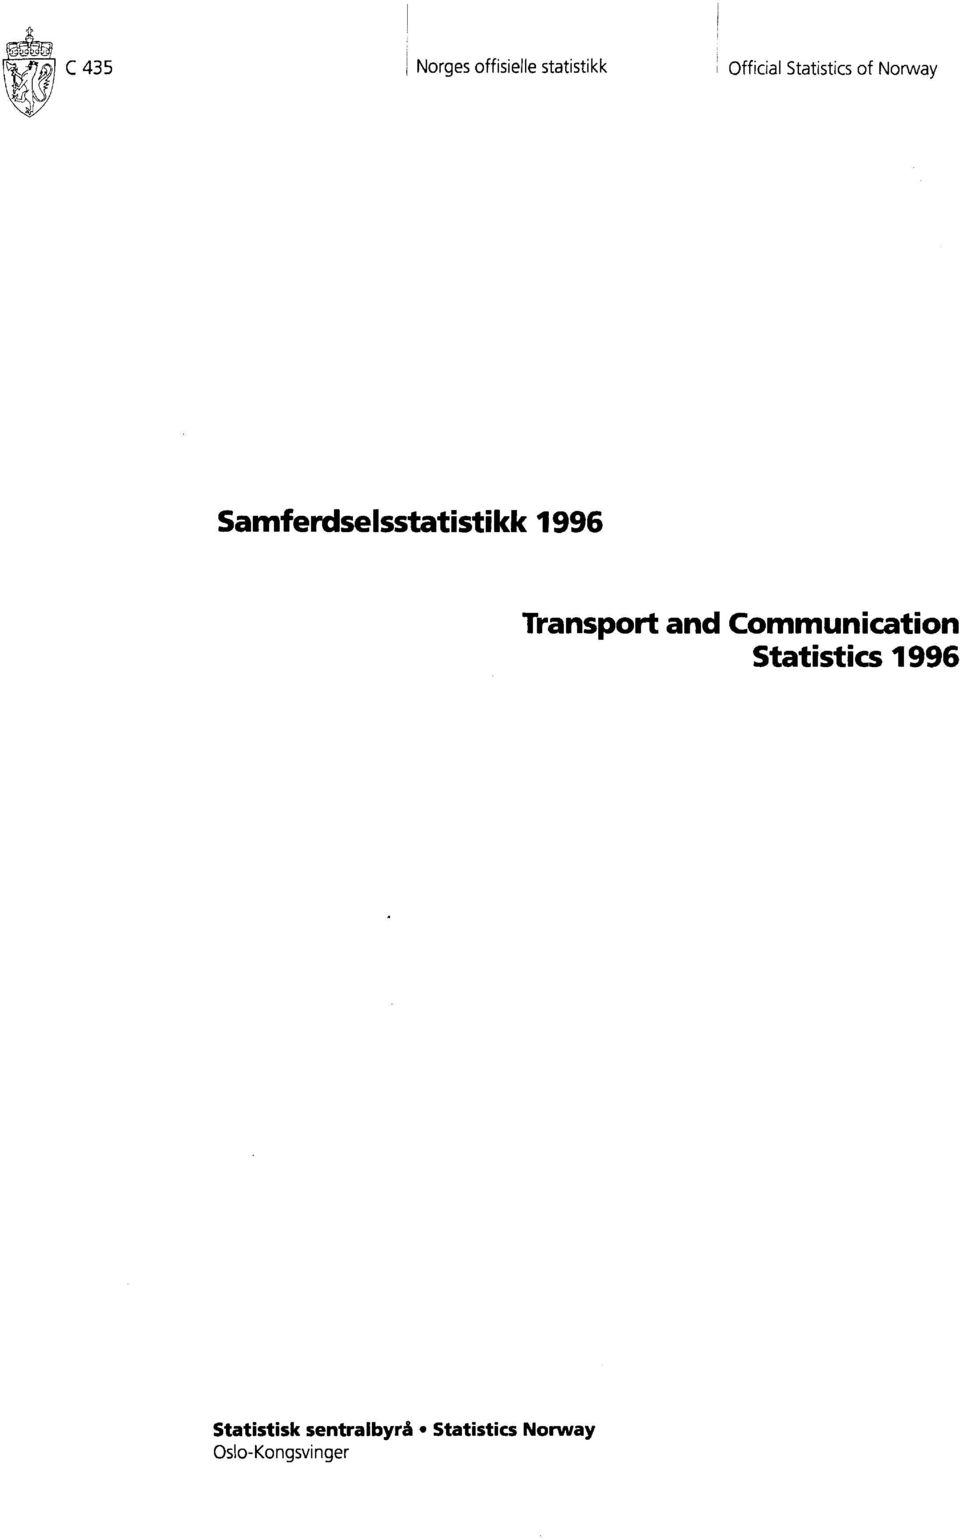 Transport and Communication Statistics 1996